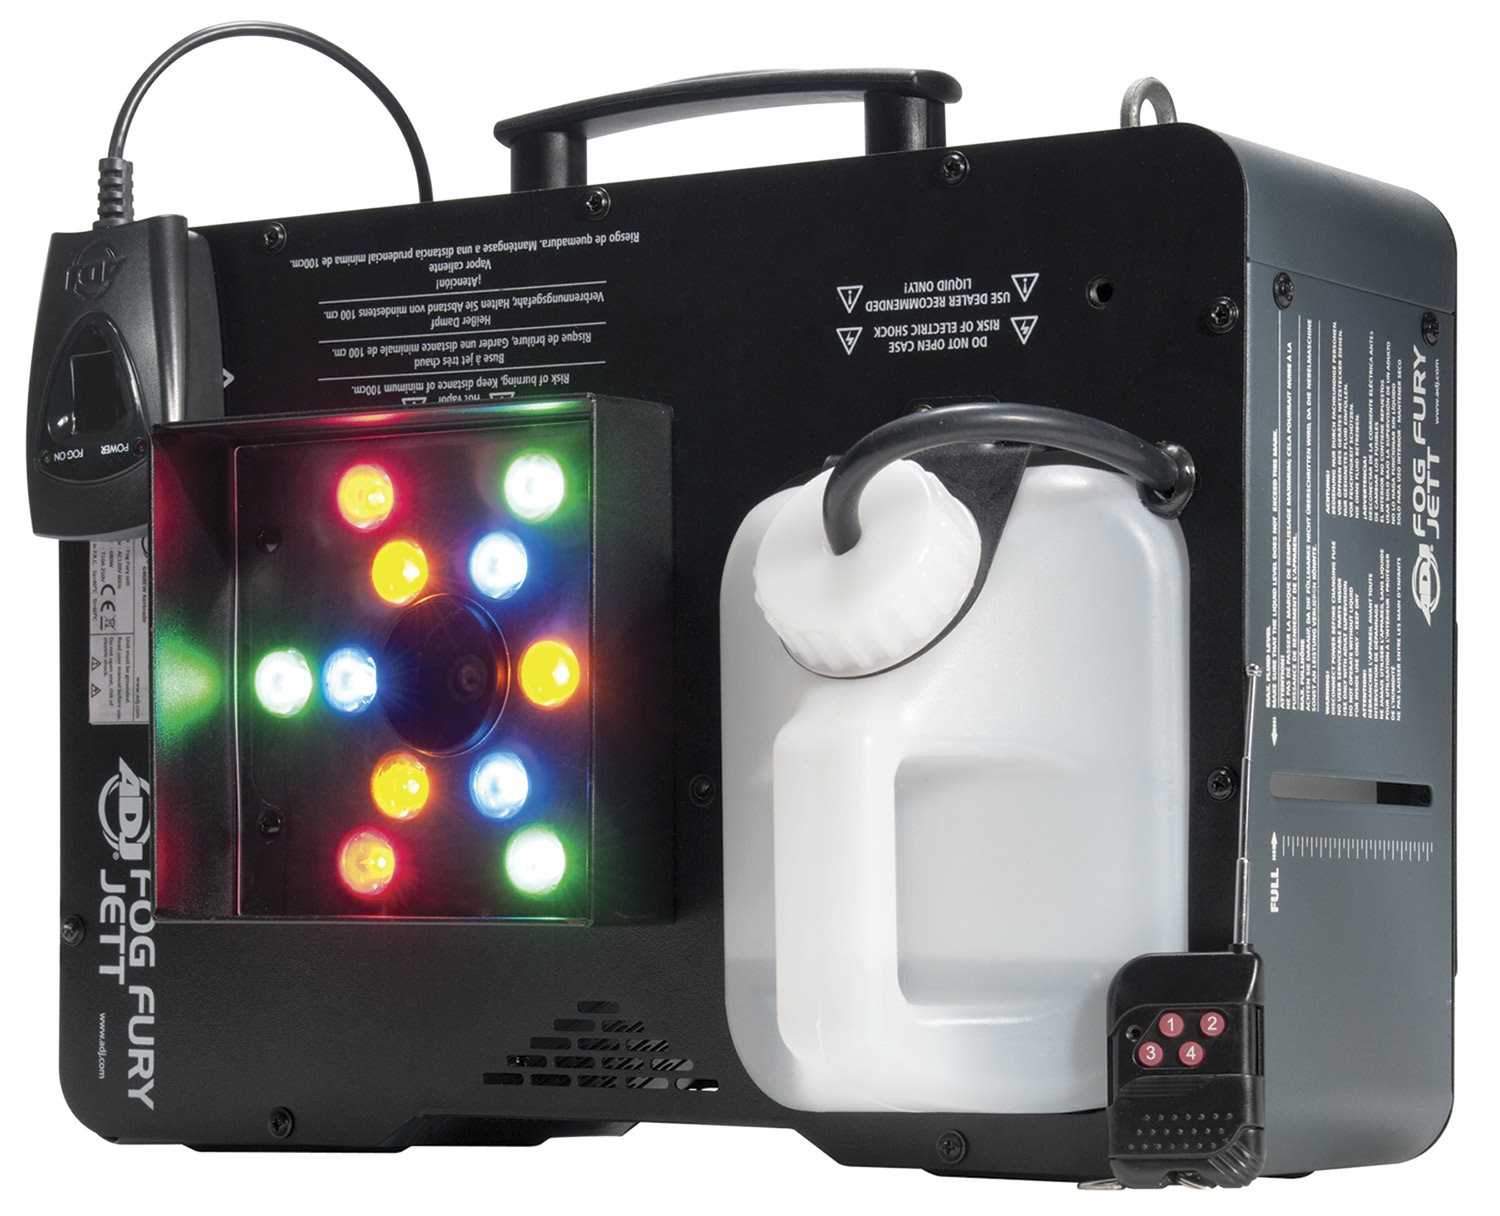 ADJ American DJ Lighting Pack with Fog, Strobe, & LED UV Light - PSSL ProSound and Stage Lighting